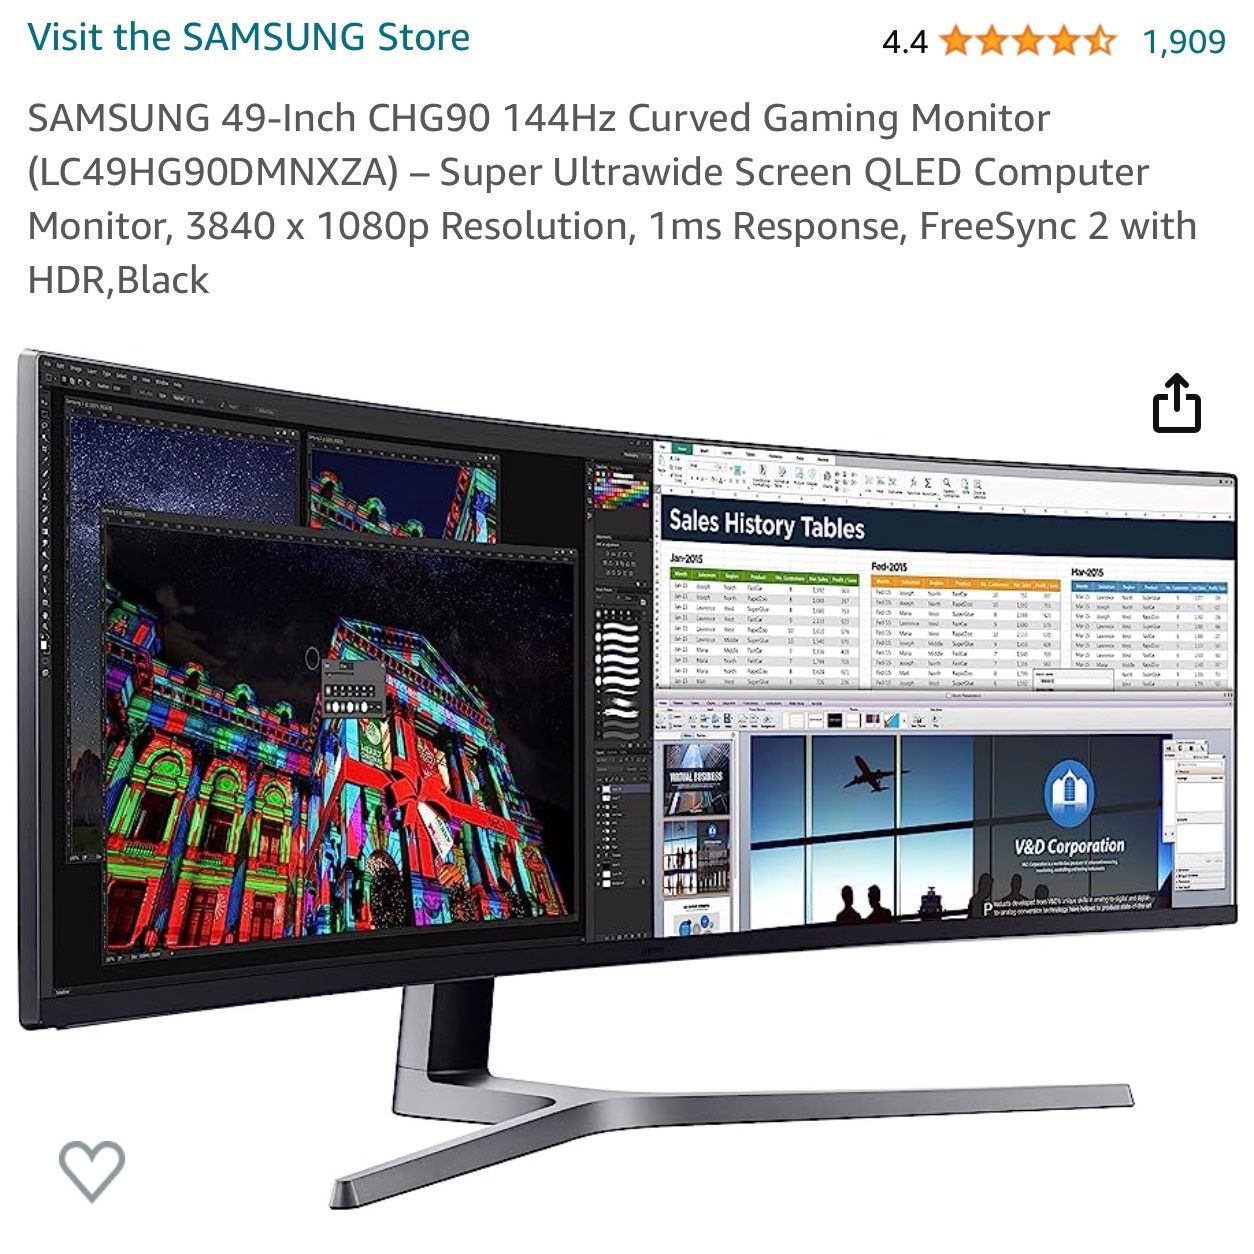 SAMSUNG 49-Inch CHG90 144Hz Curved Gaming Monitor 